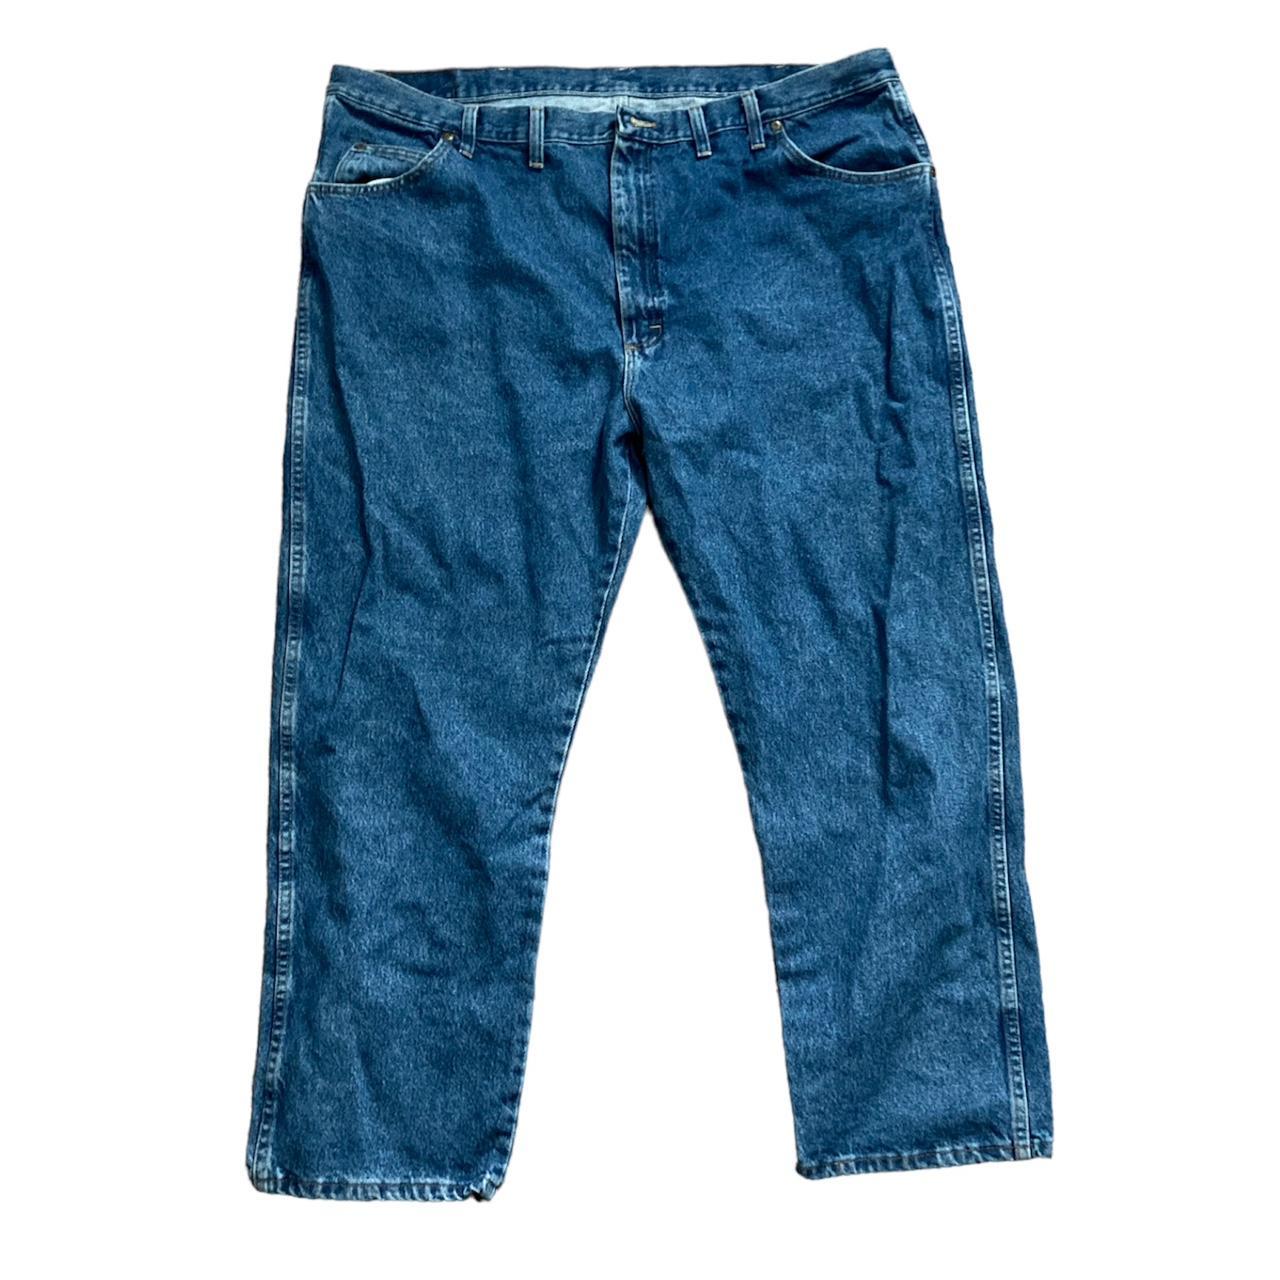 Wrangler jeans size 46x29 #wrangler #baggy #baggyjeans - Depop